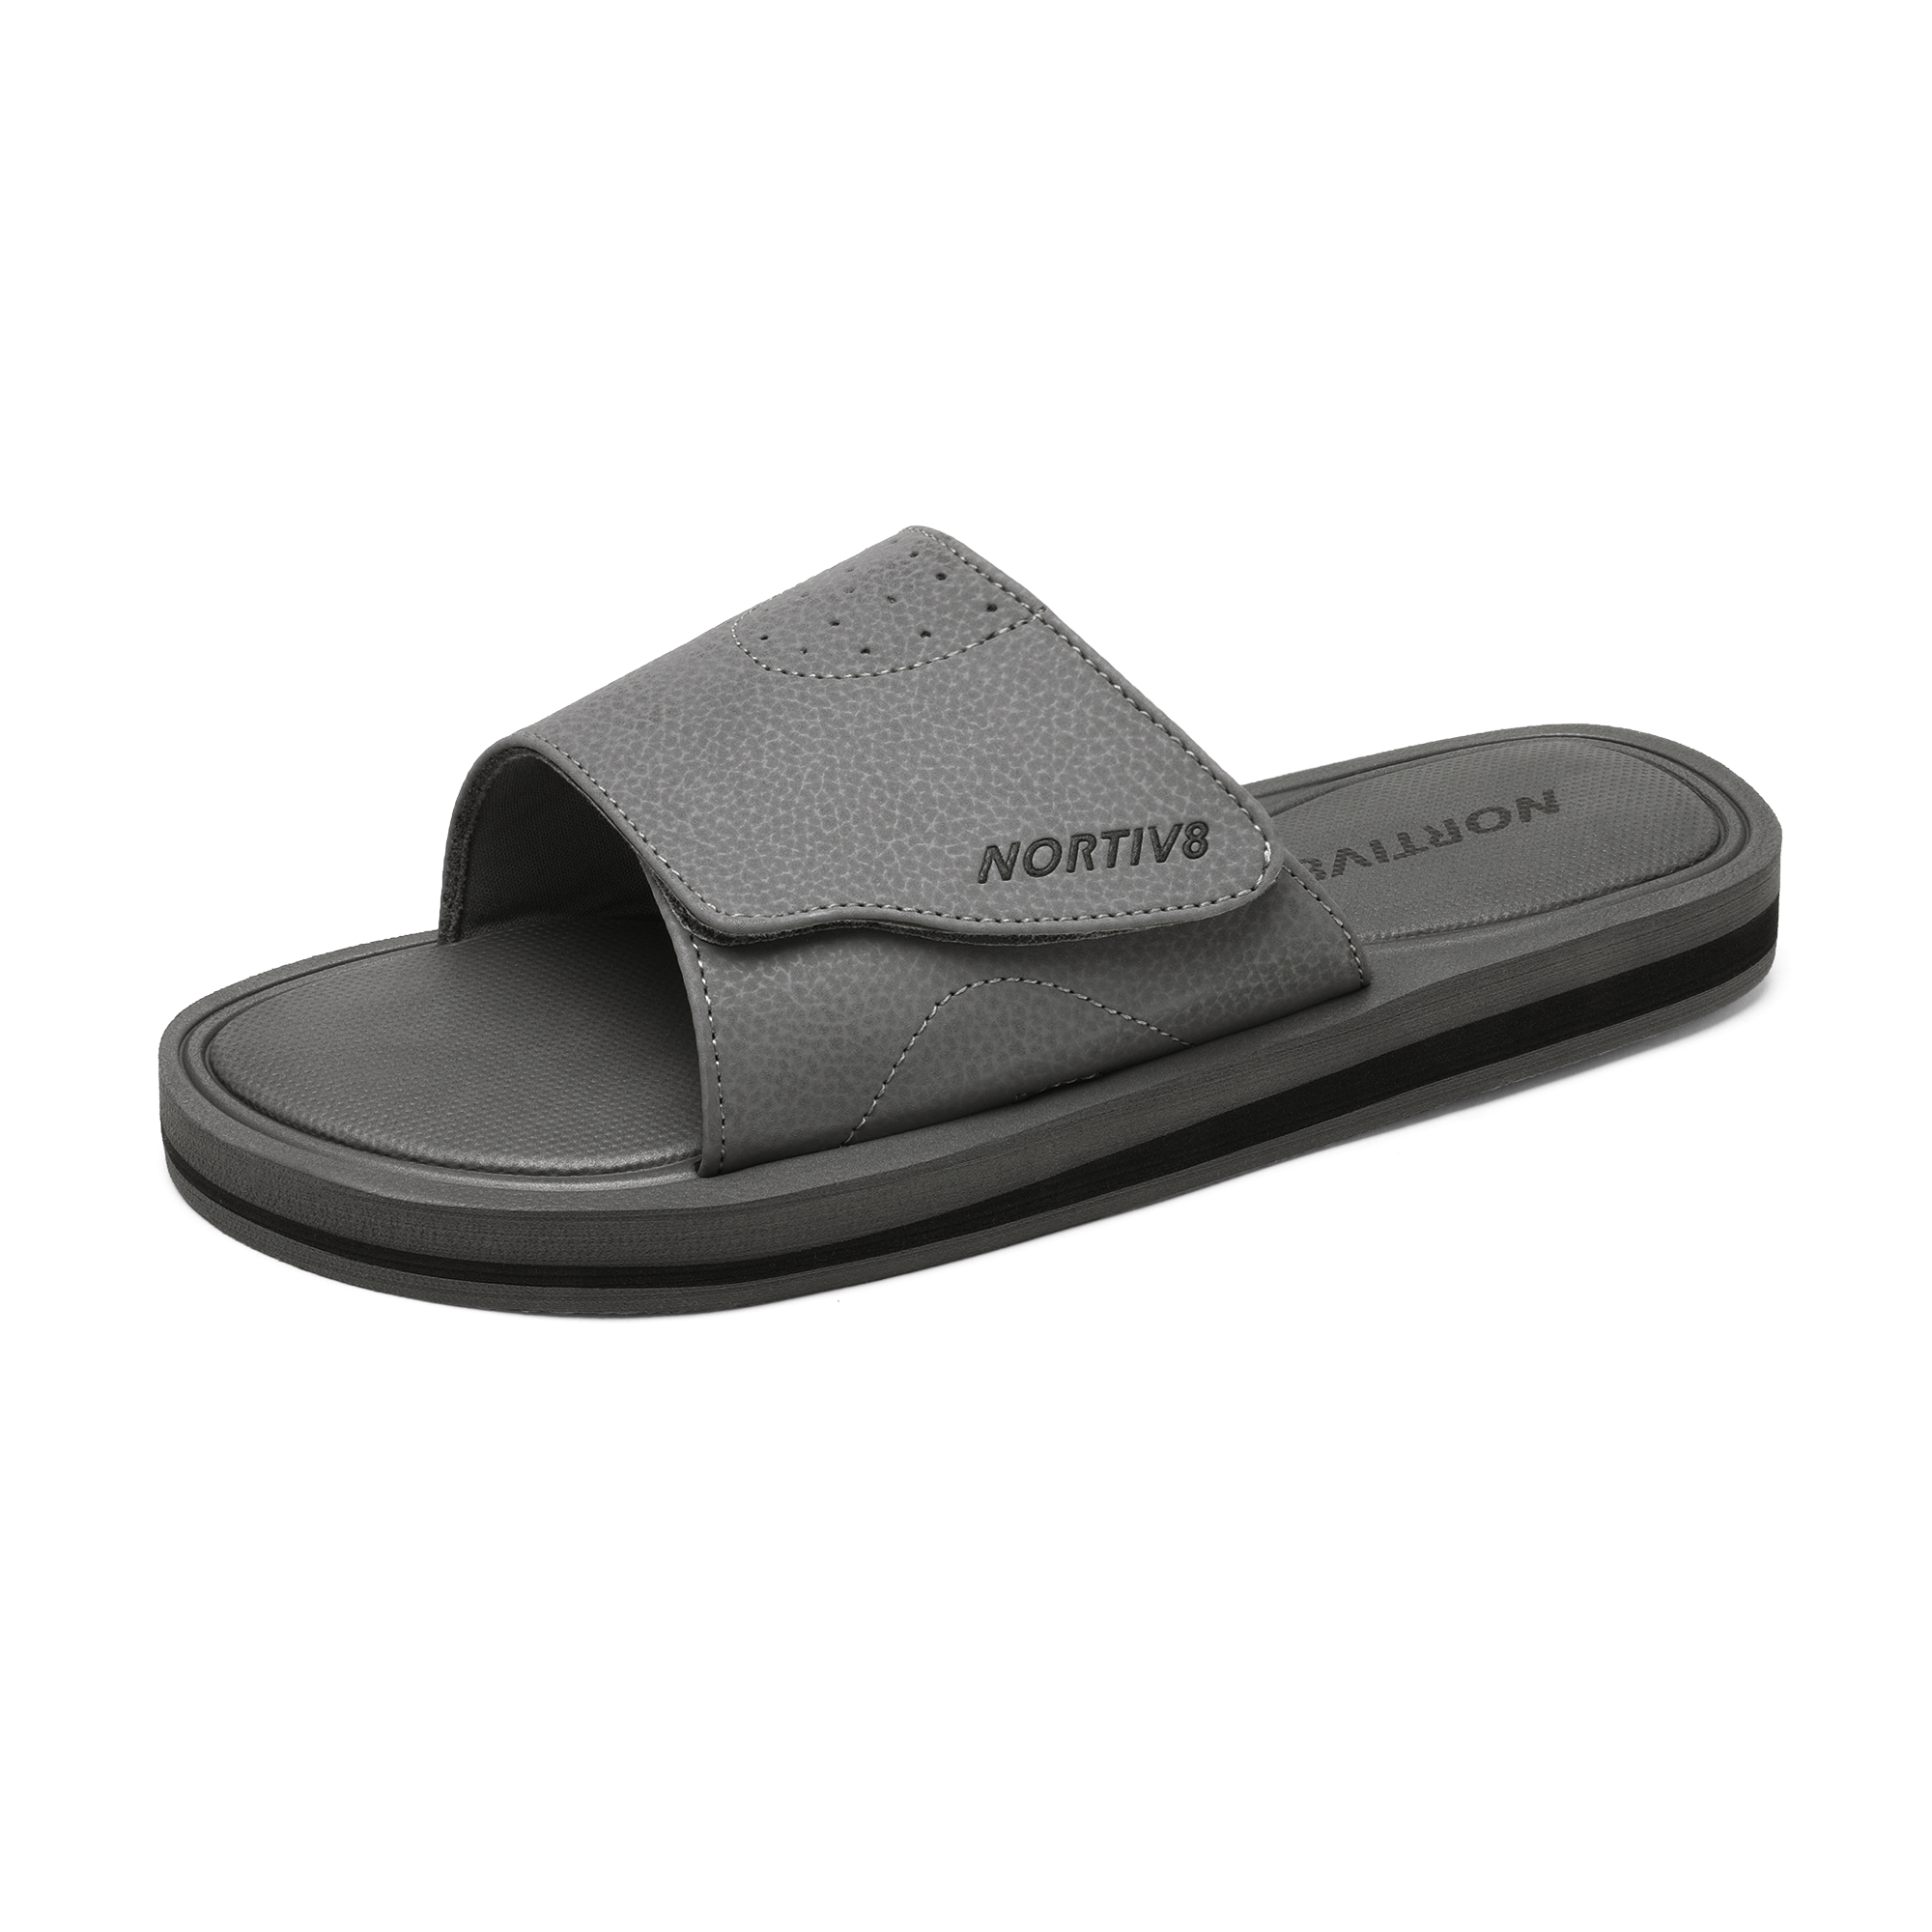 Nortiv8 Men's Memory Foam Adjustable Slide Sandals Comfort Lightweight Summer Beach Sandals Shoes FUSION GREY Size 12 - image 1 of 5